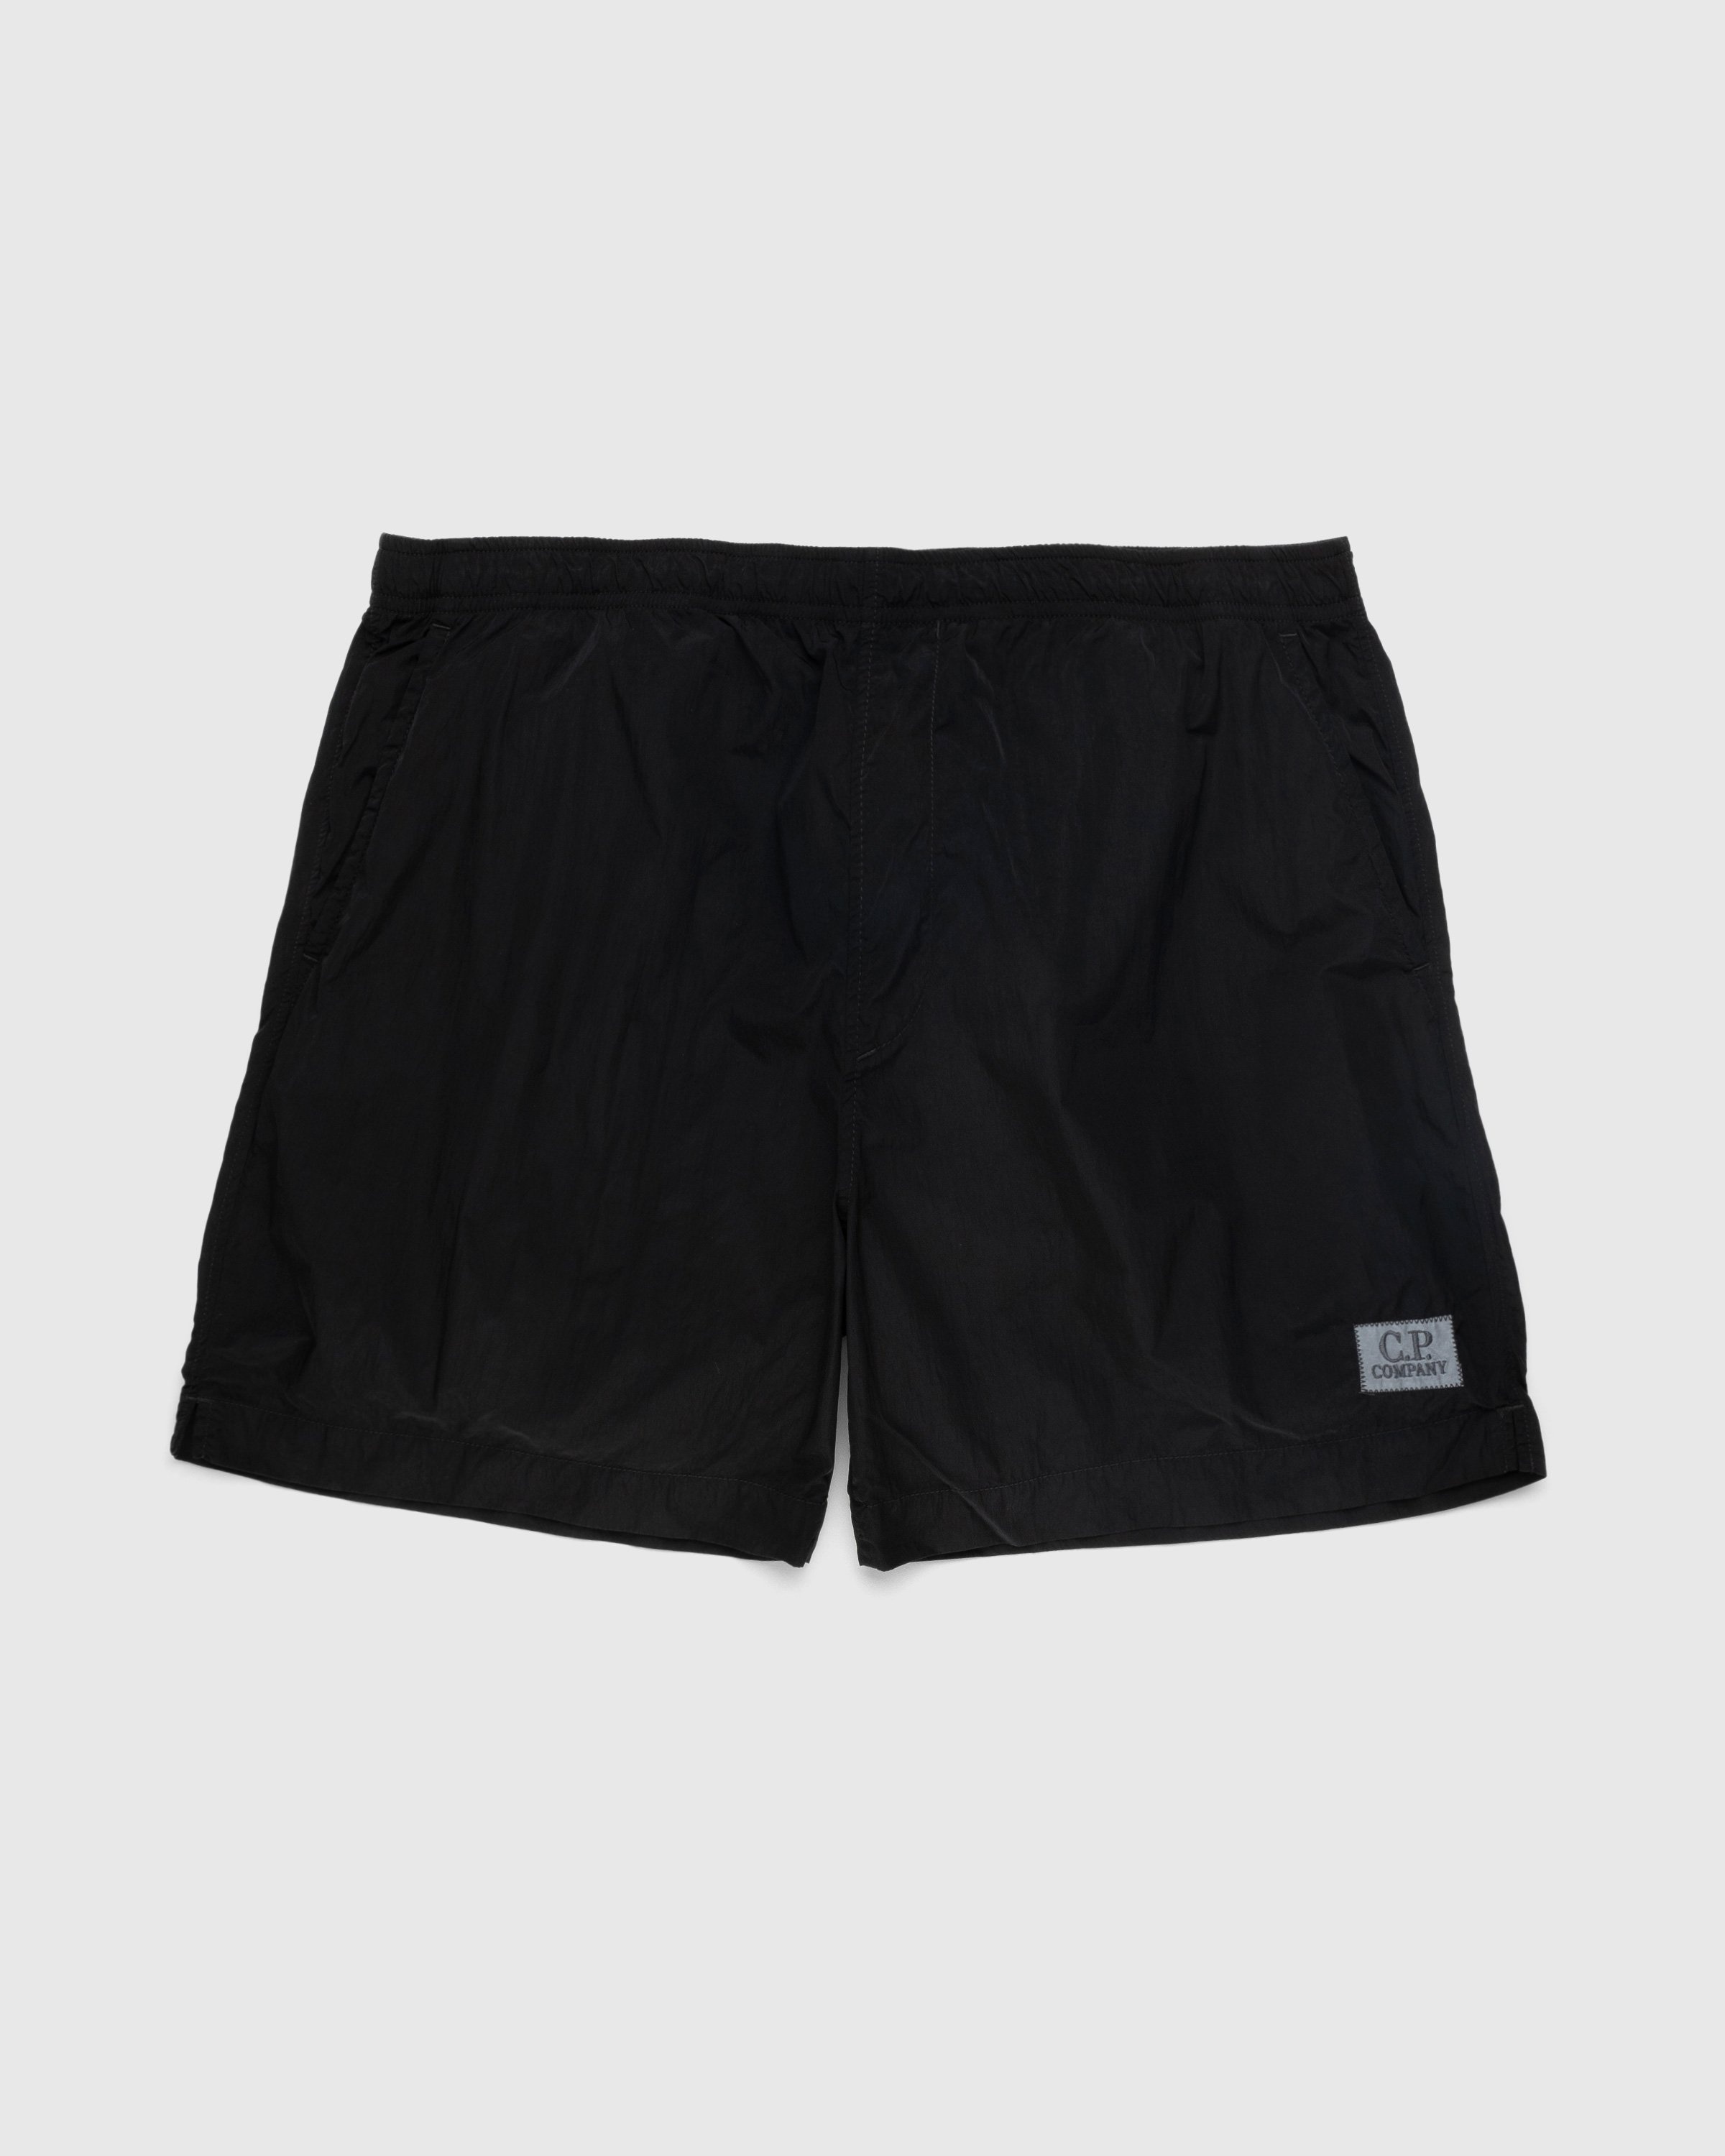 C.P. Company – Eco-Chrome Swim Shorts Black - Swimwear - Black - Image 1